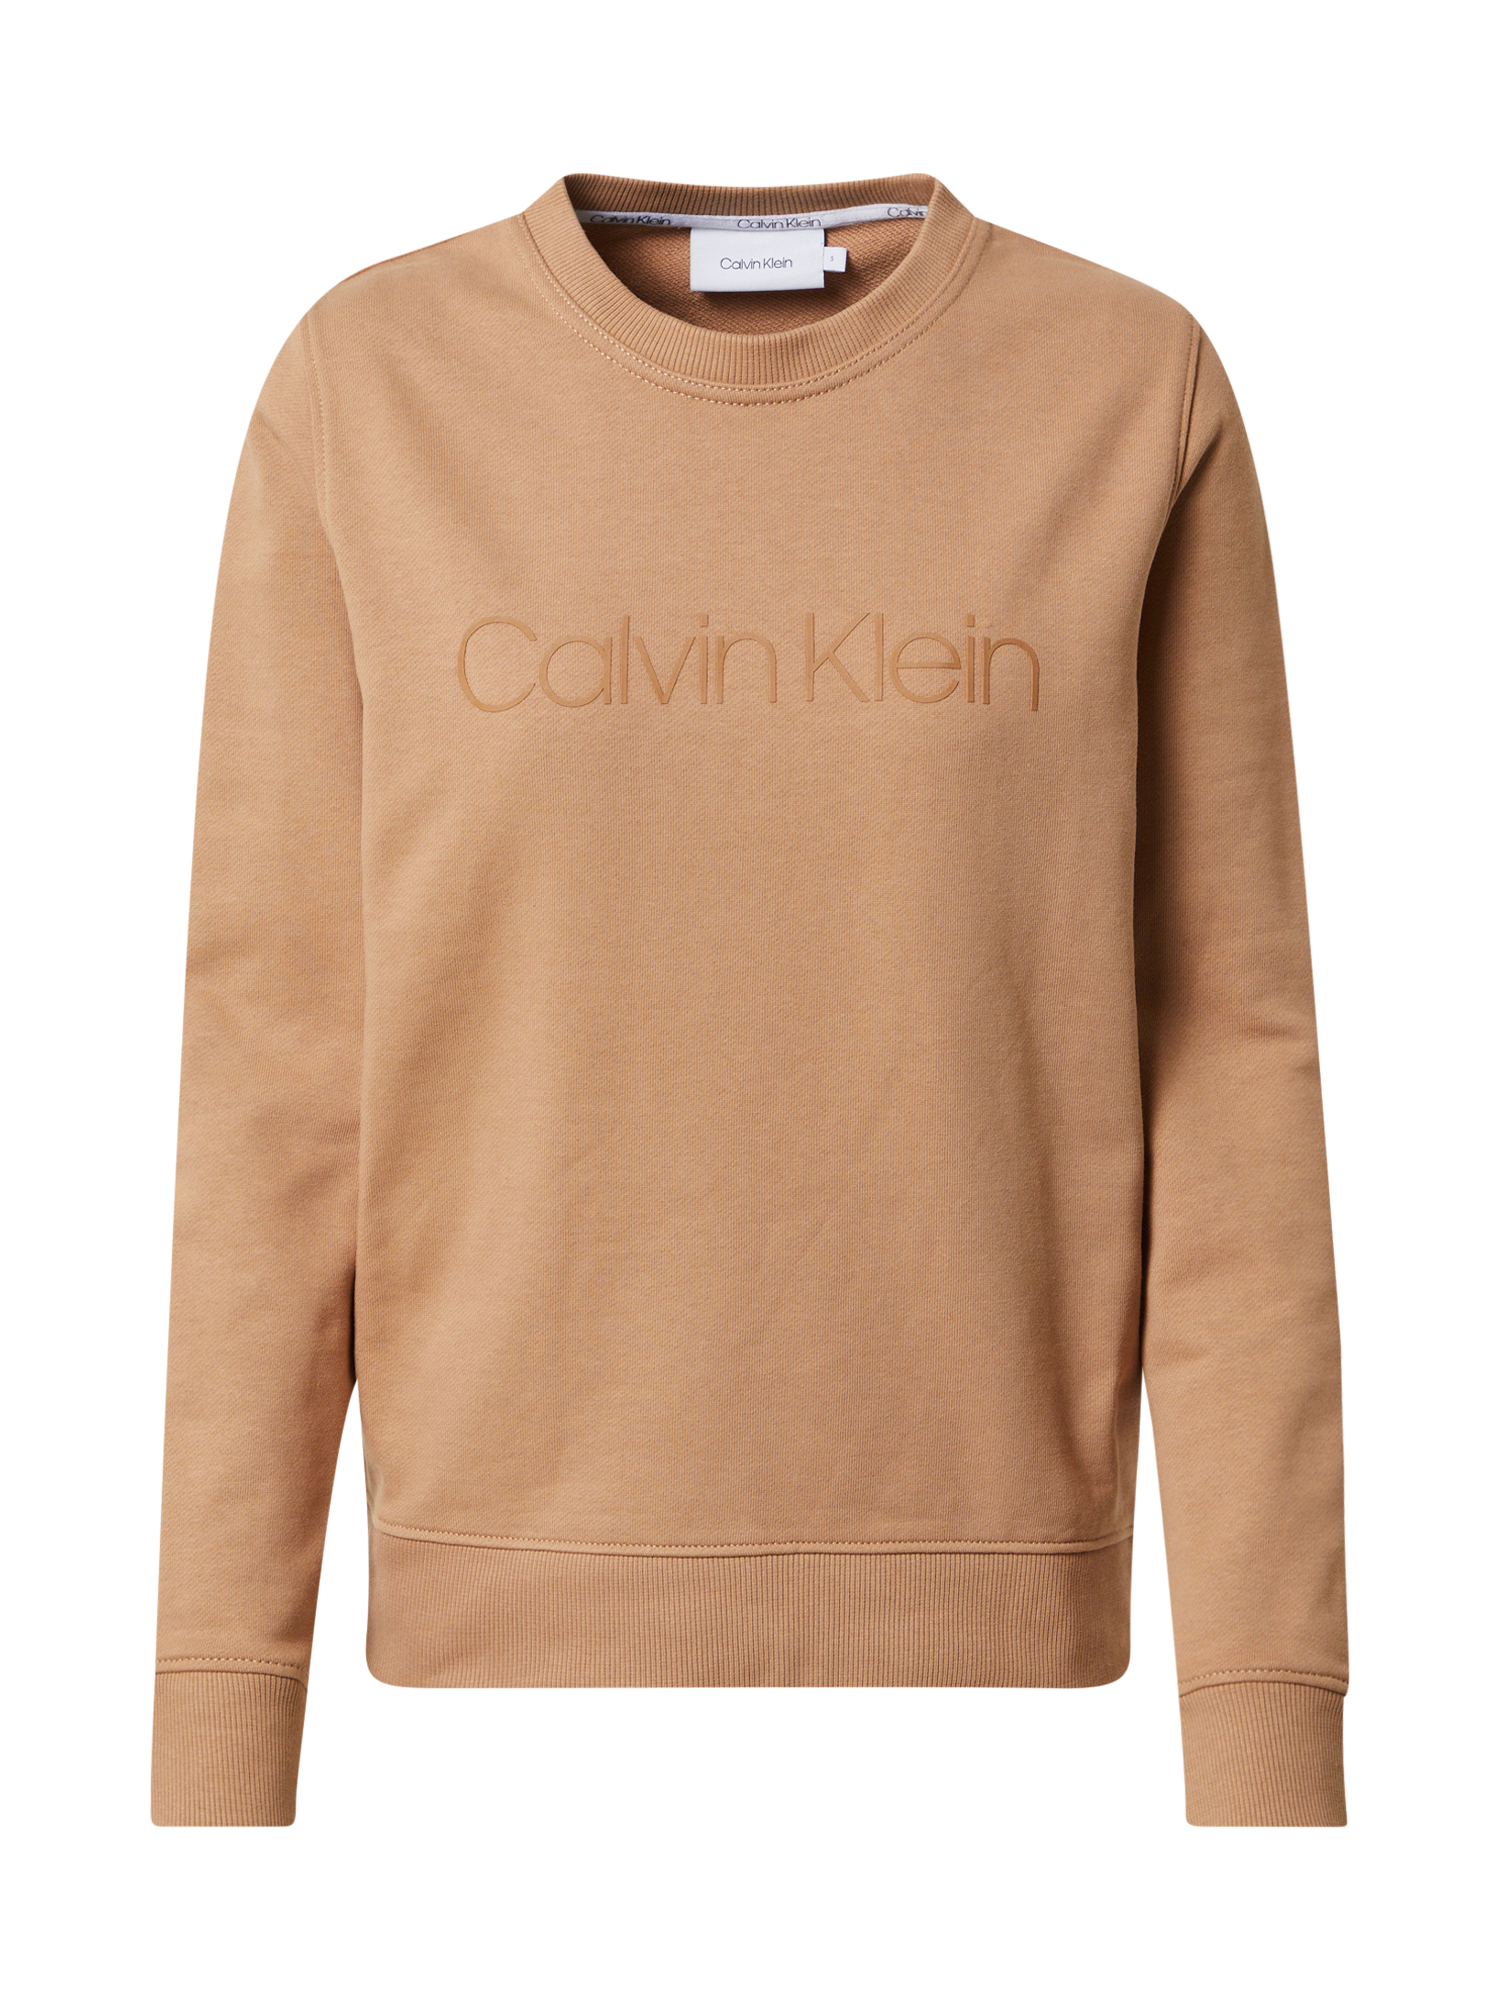 Calvin Klein Sweatshirt in Beige 